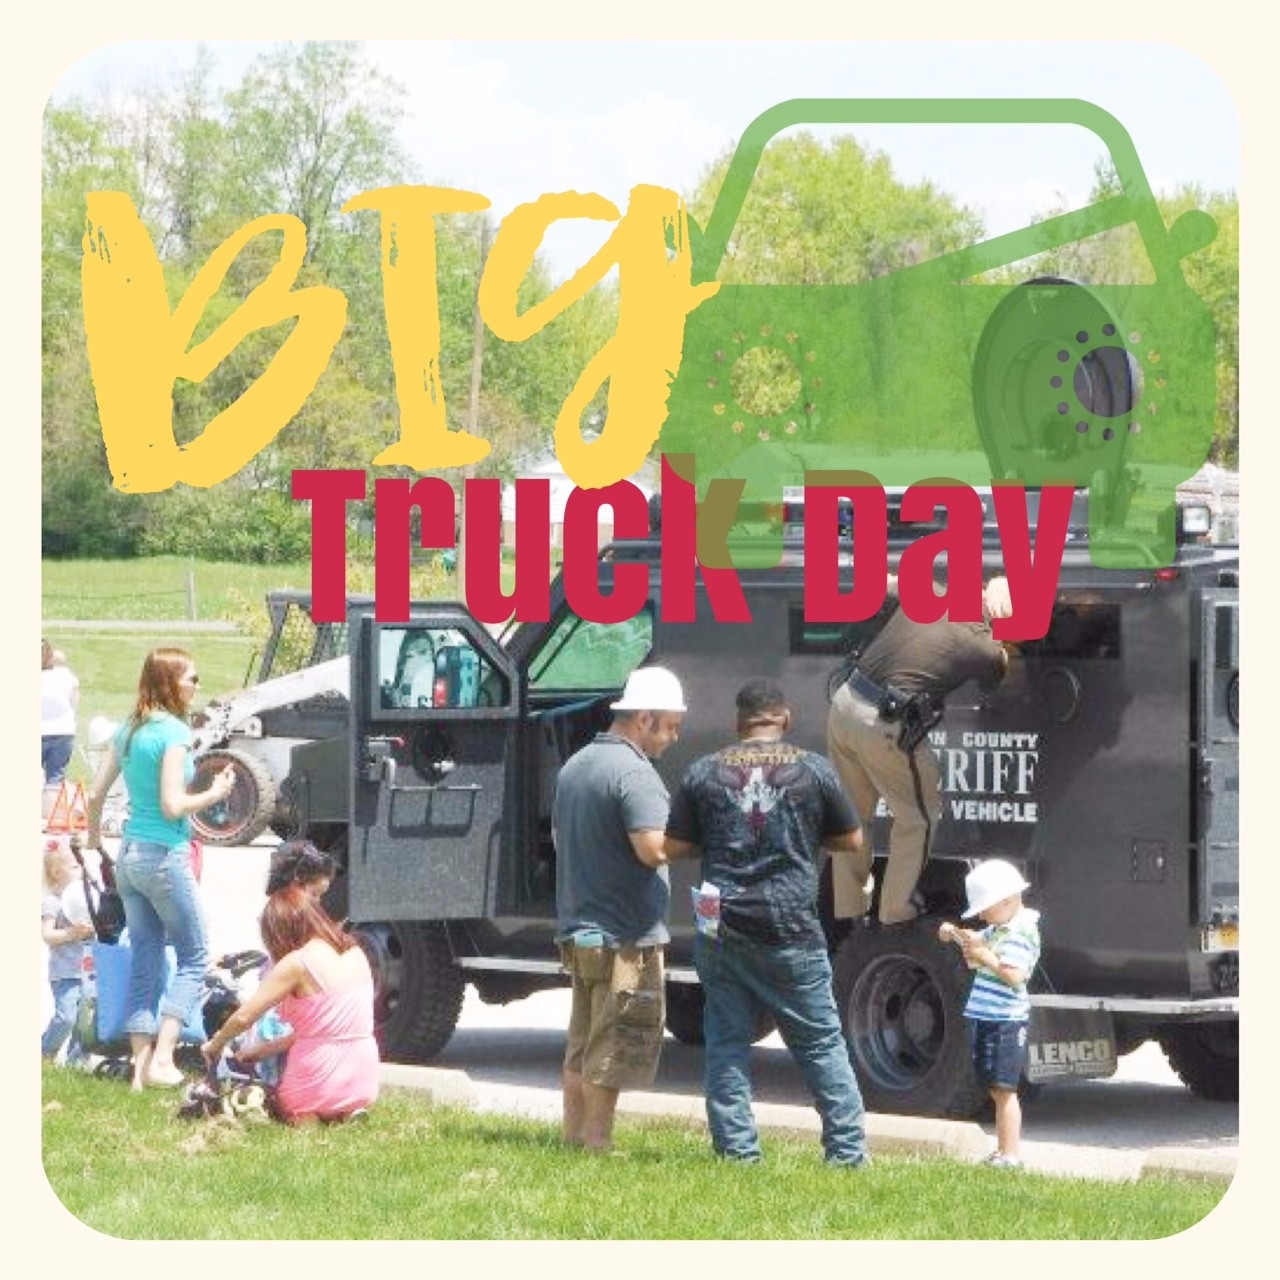 BIG Truck Day Village of Godfrey, Illinois